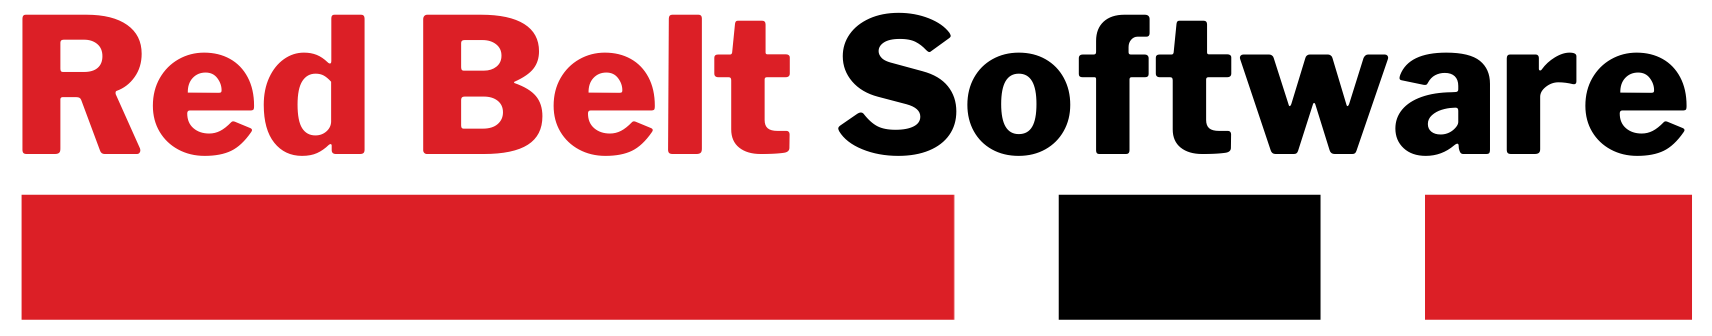 Red Belt Software